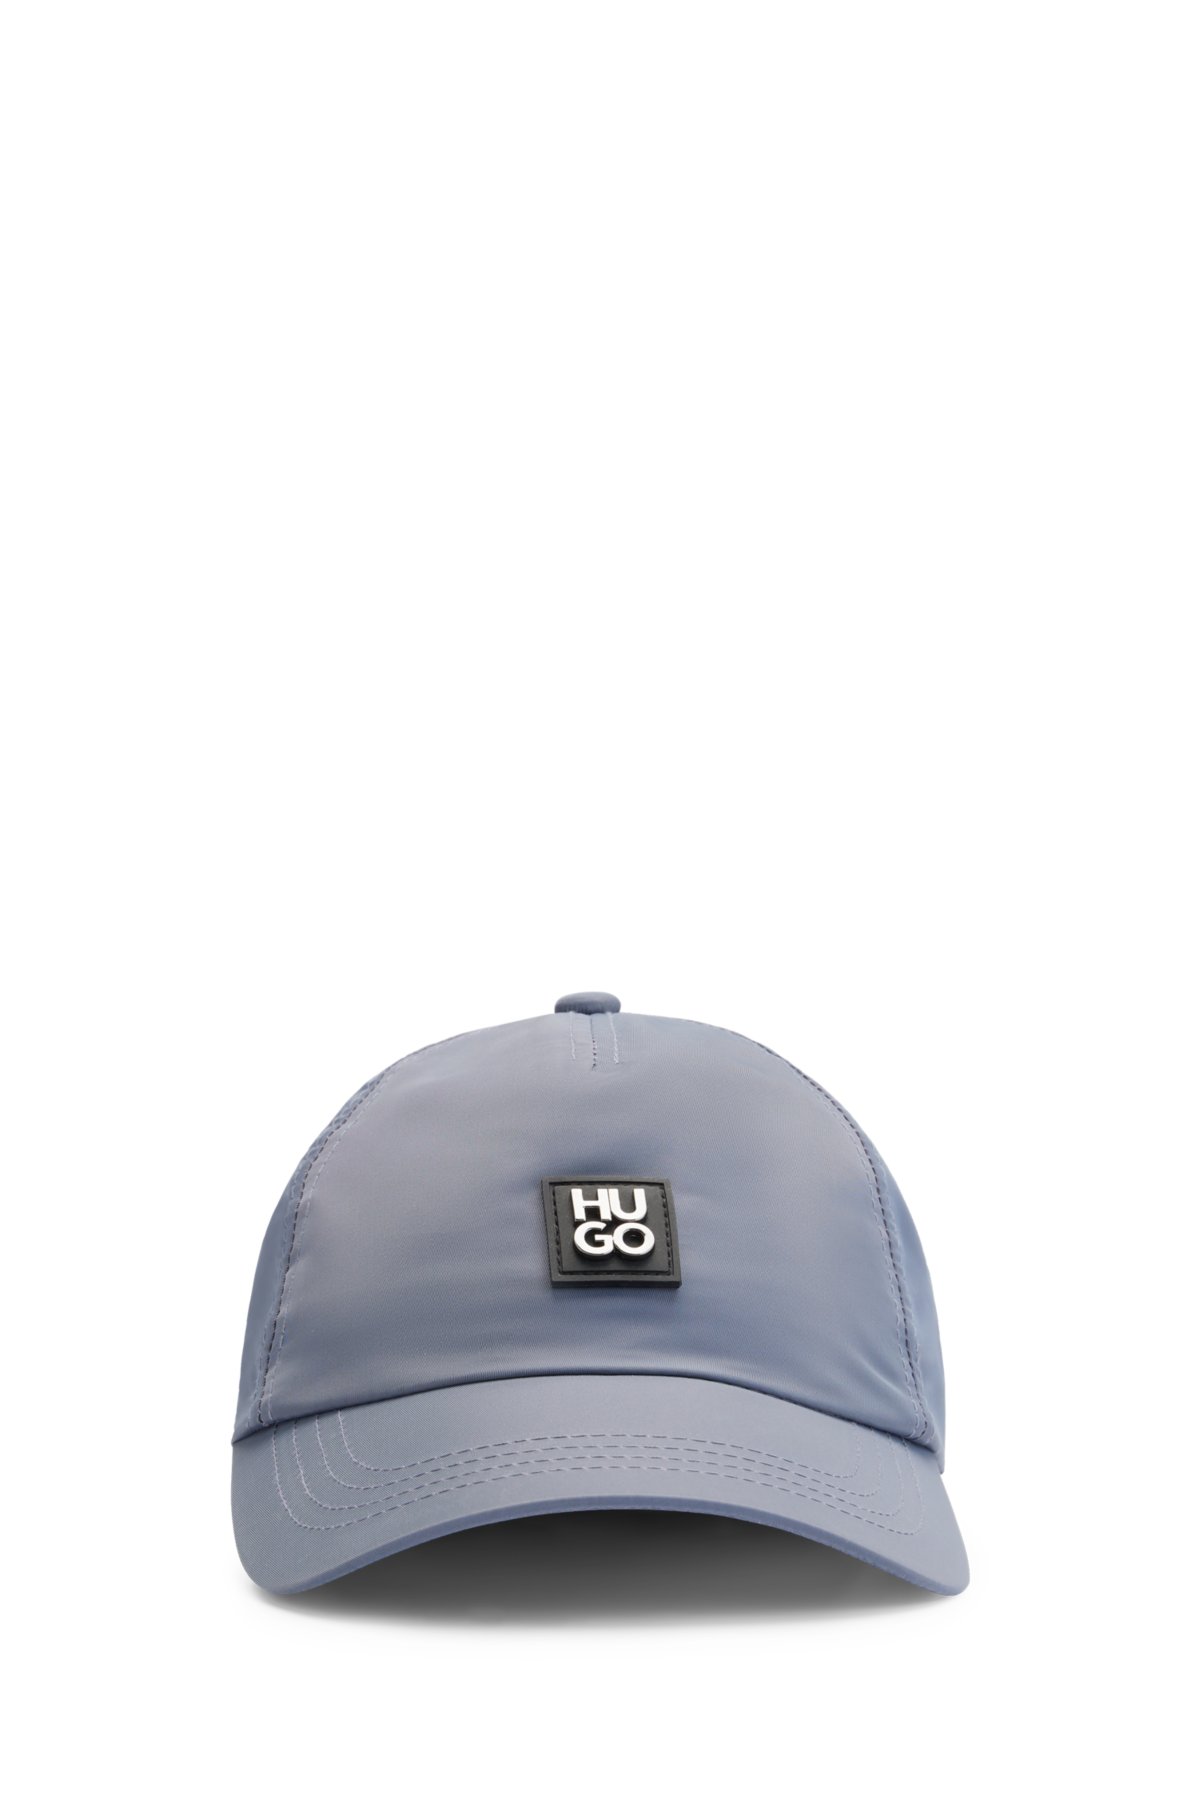 Waterproof-nylon cap with stacked logo badge, Light Blue